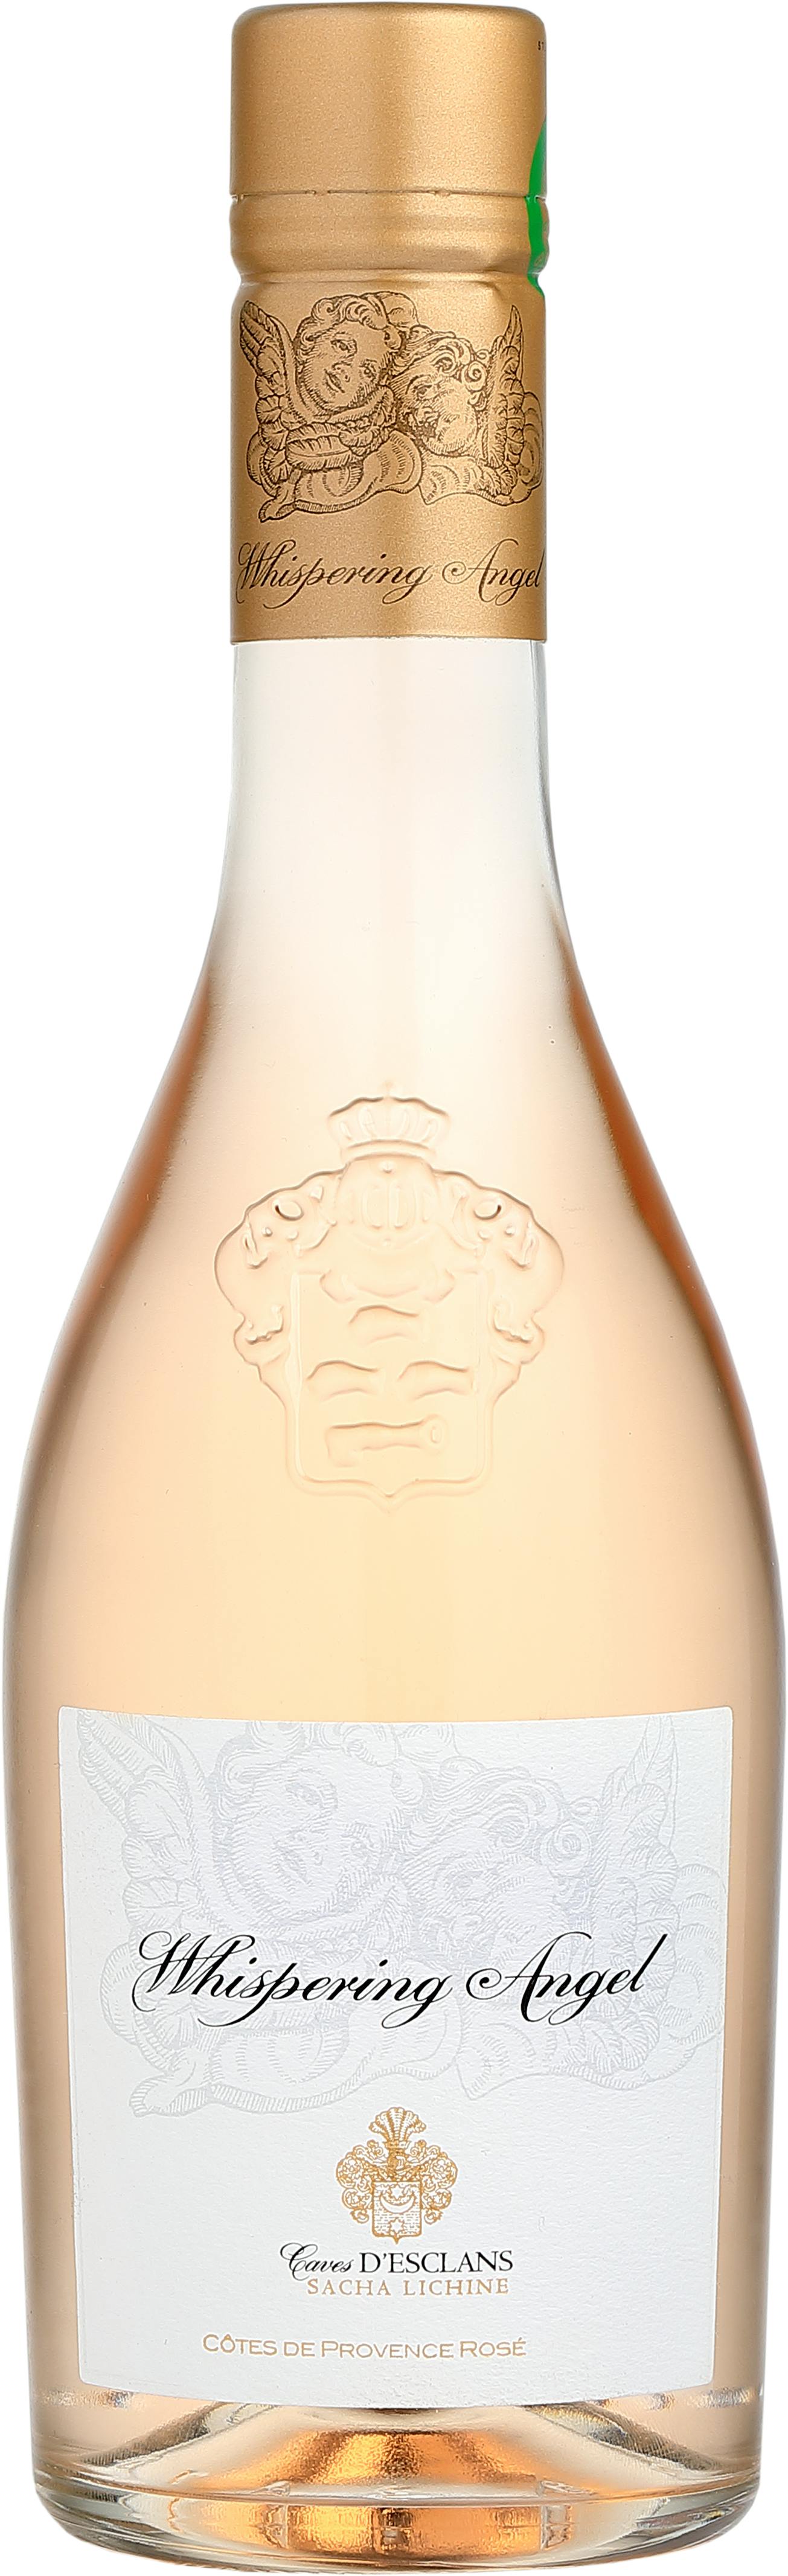 Wine Vine Rosé - Republic